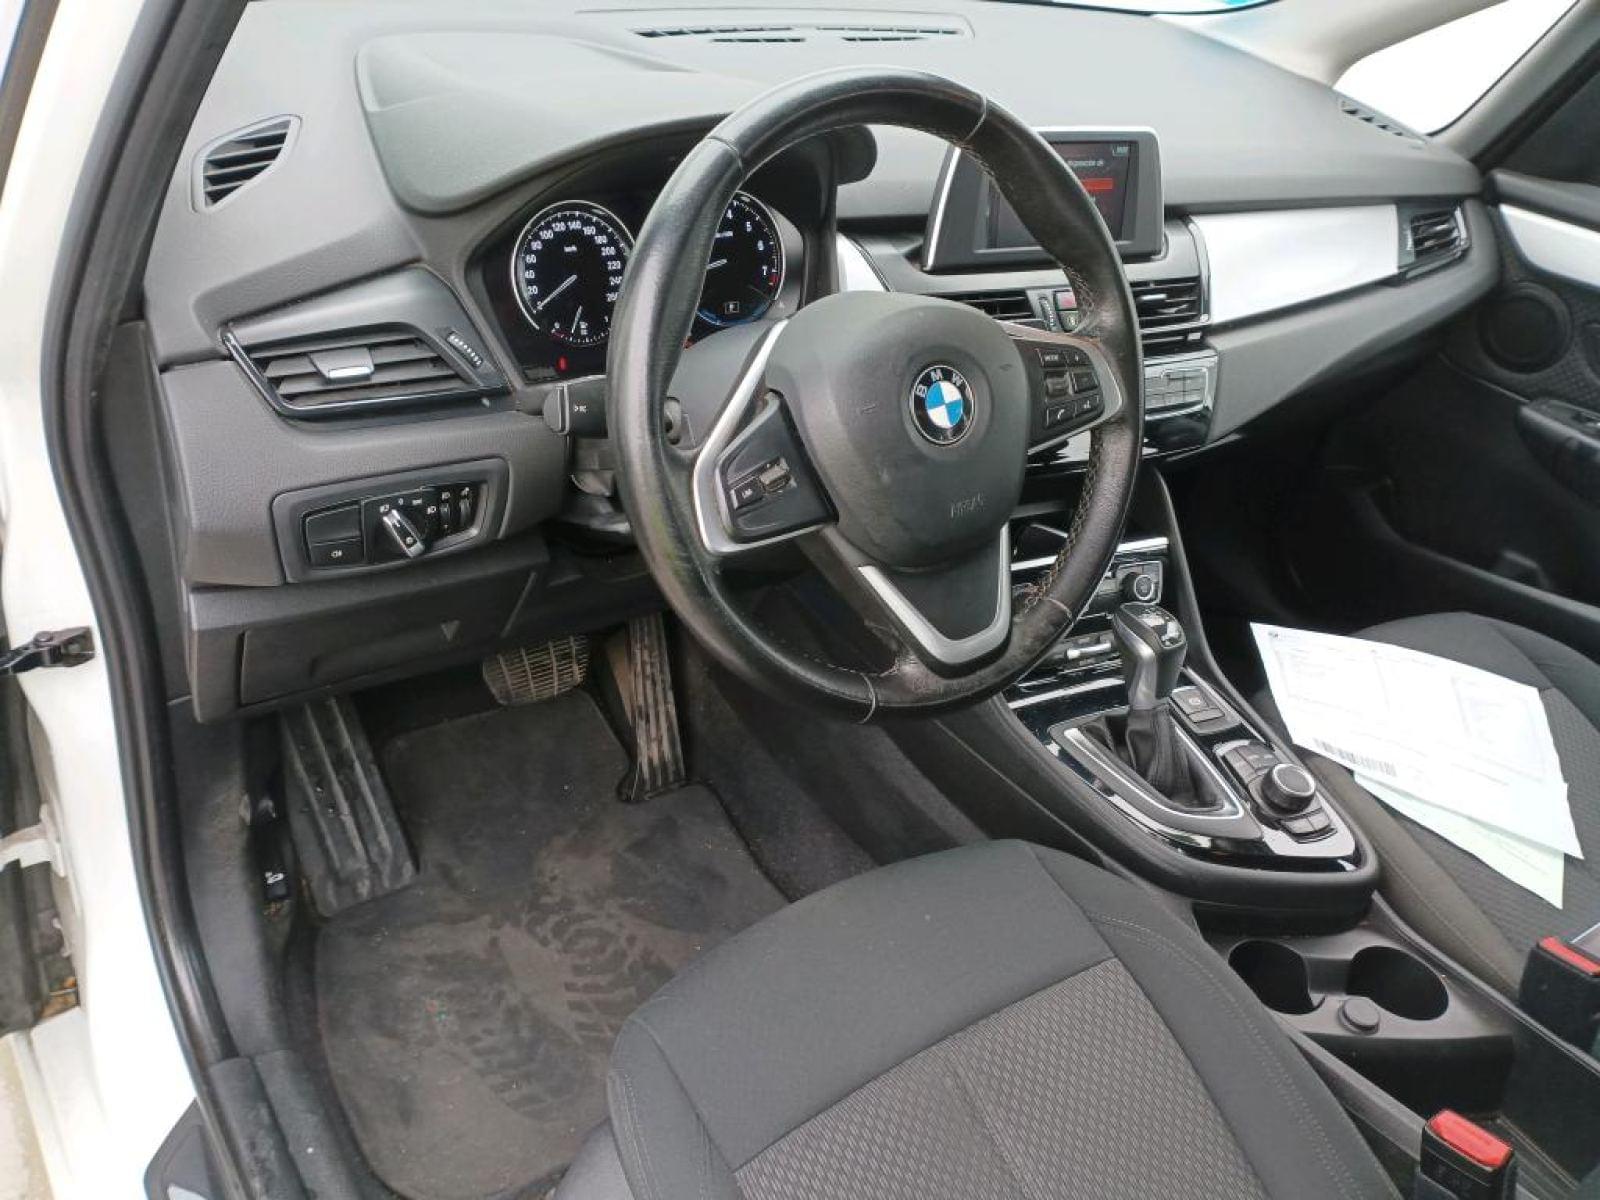 BMW SERIE 2 ACTIVE TOURER 225 XE IPERFORMANCE 1.5 225 CV AT6 E6DT 2 